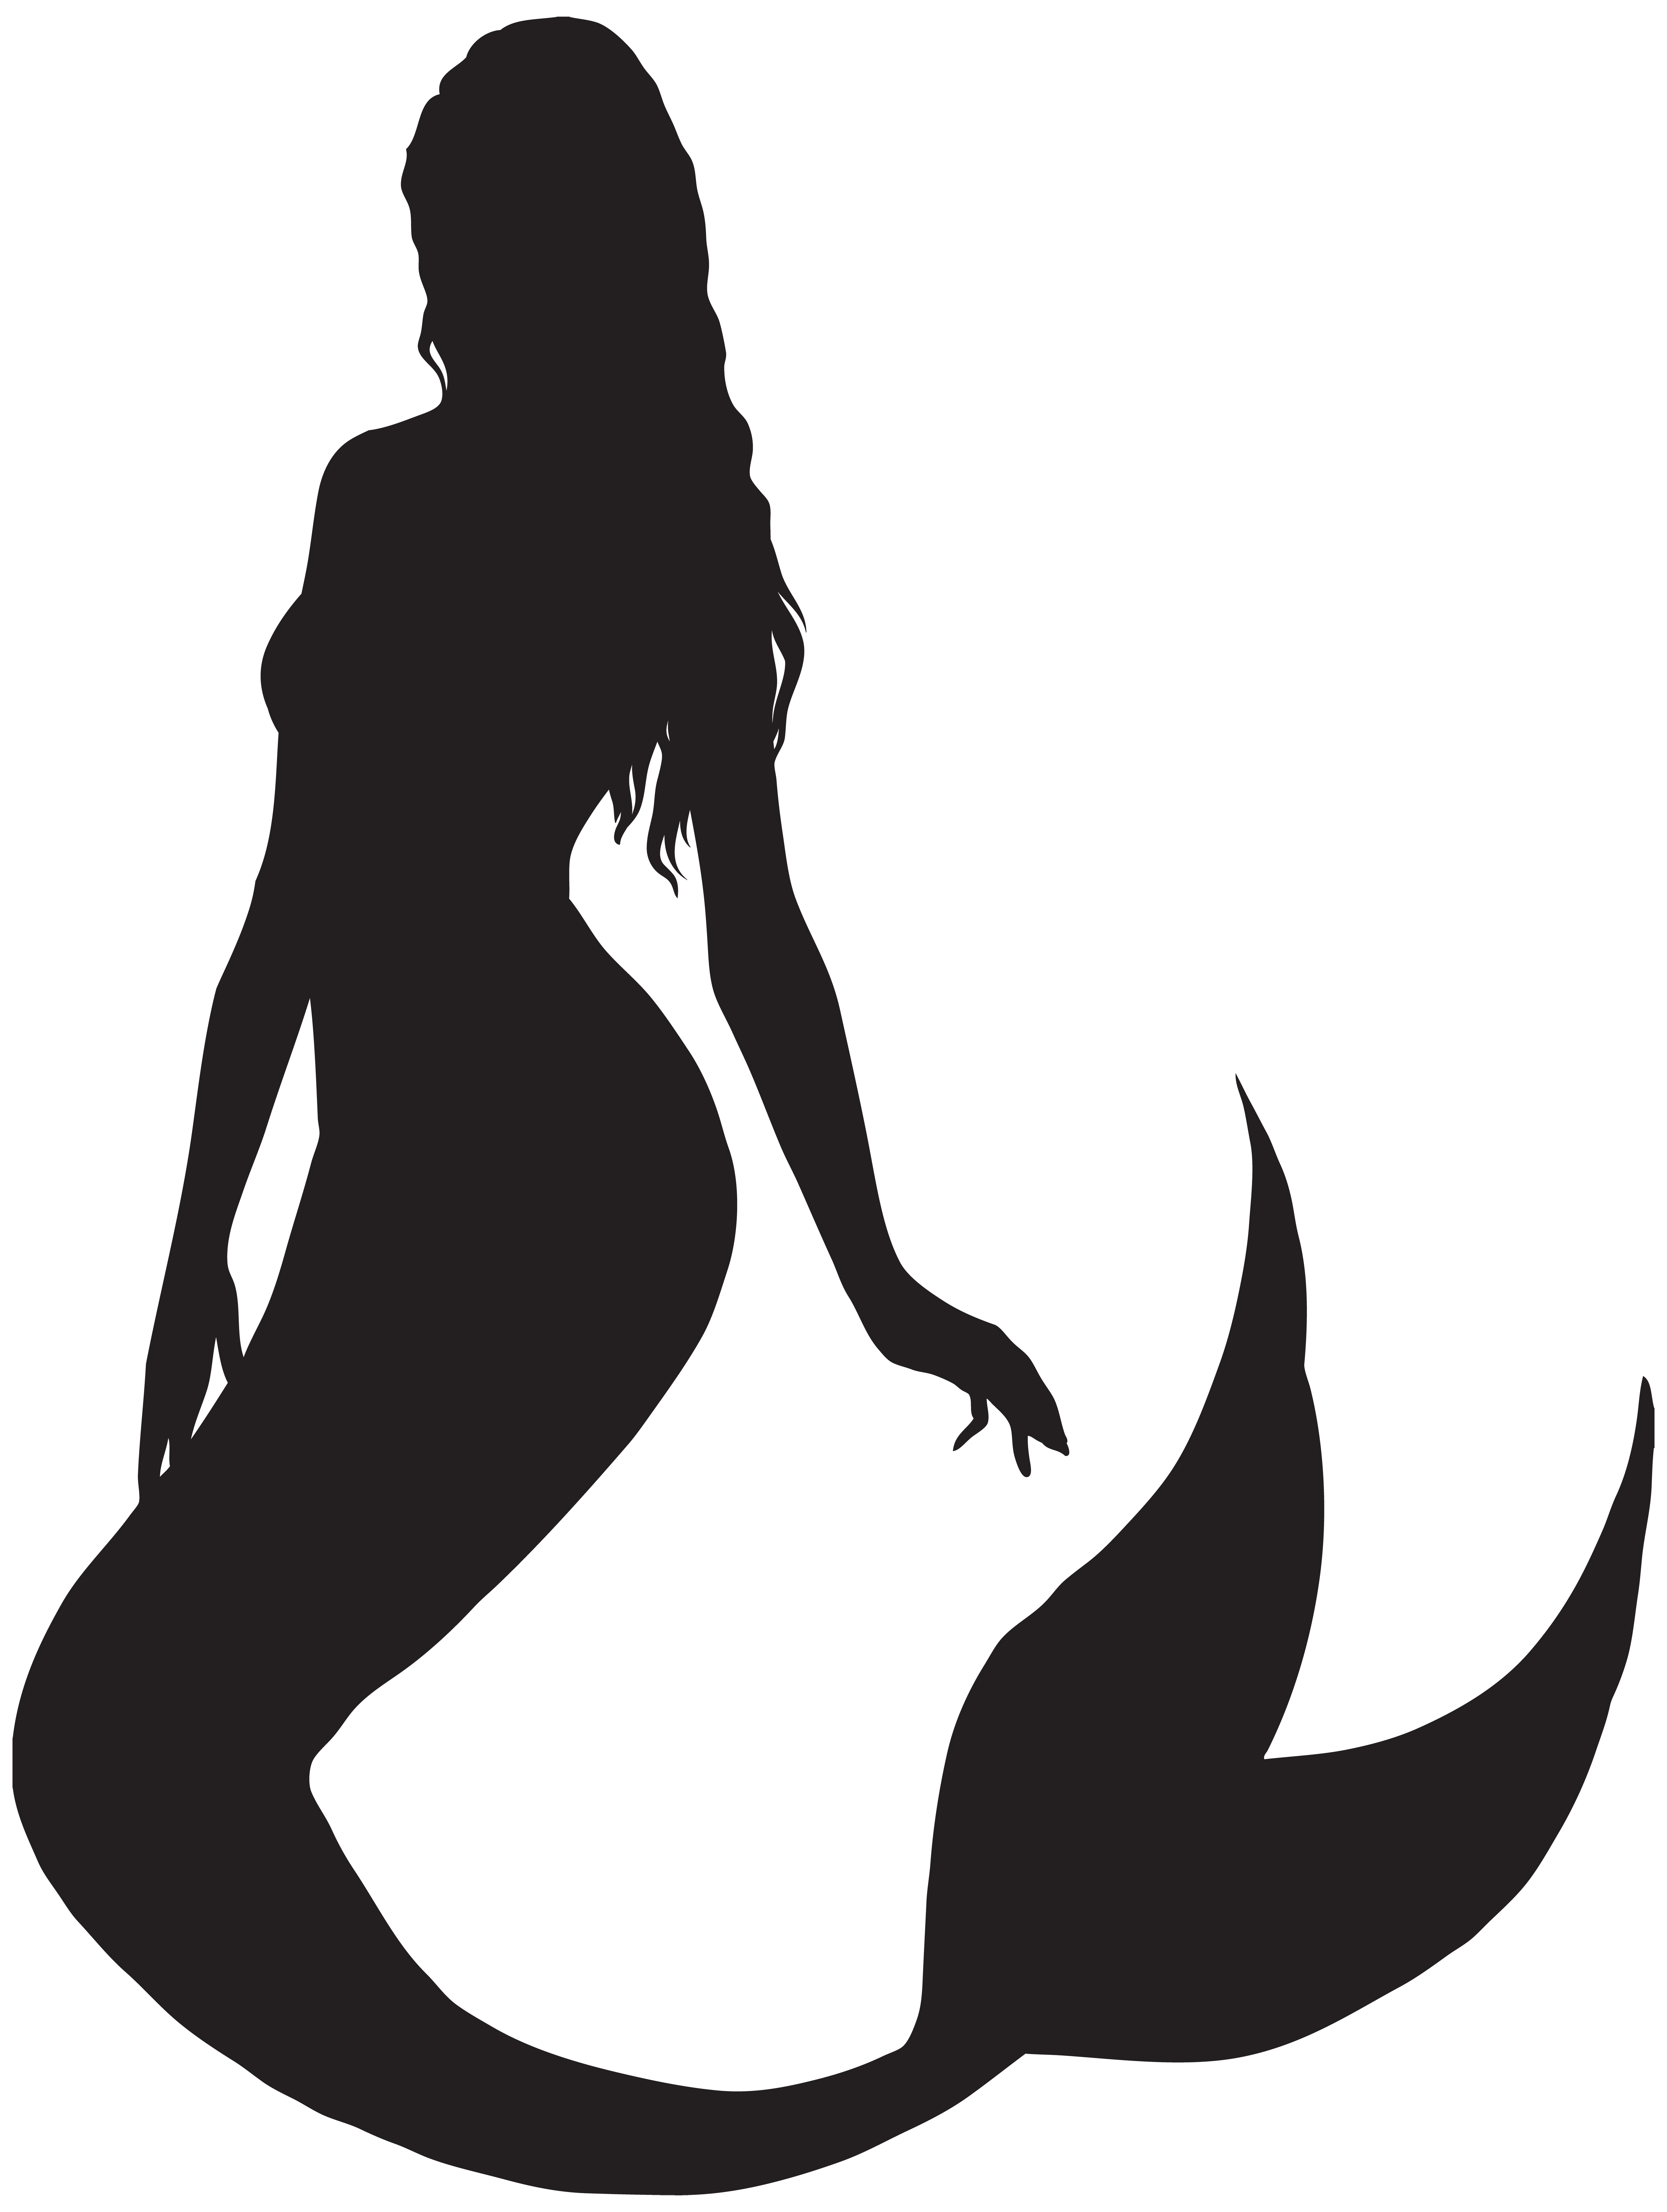 Ariel Mermaid Silhouette Clip Art Mermaid Tail Png Download 6028